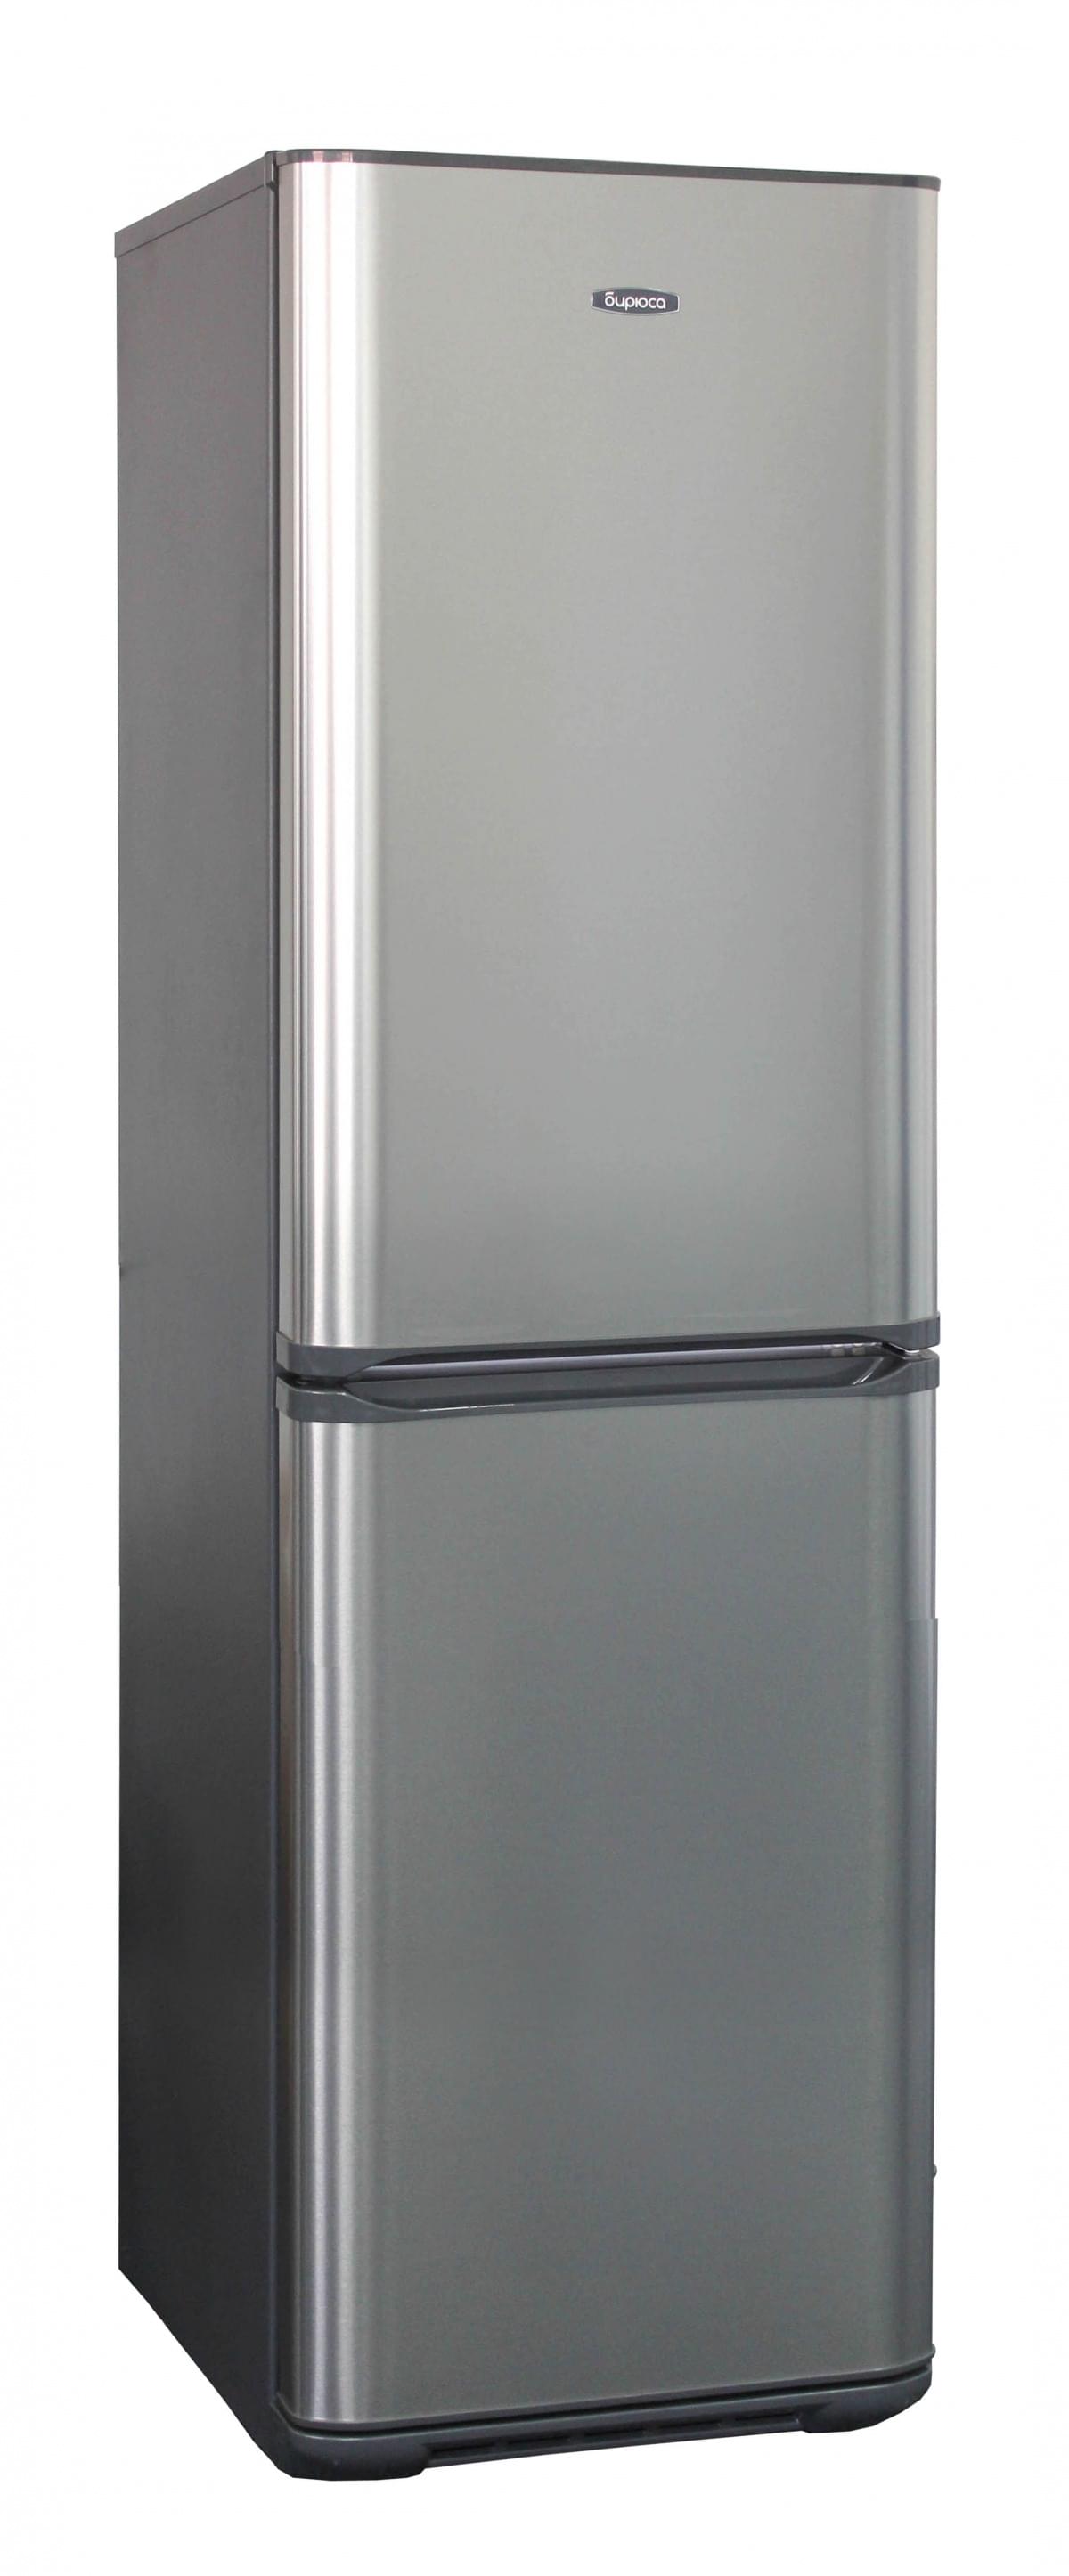 Бирюса I 340 NF  Холодильник - уменьшенная 6